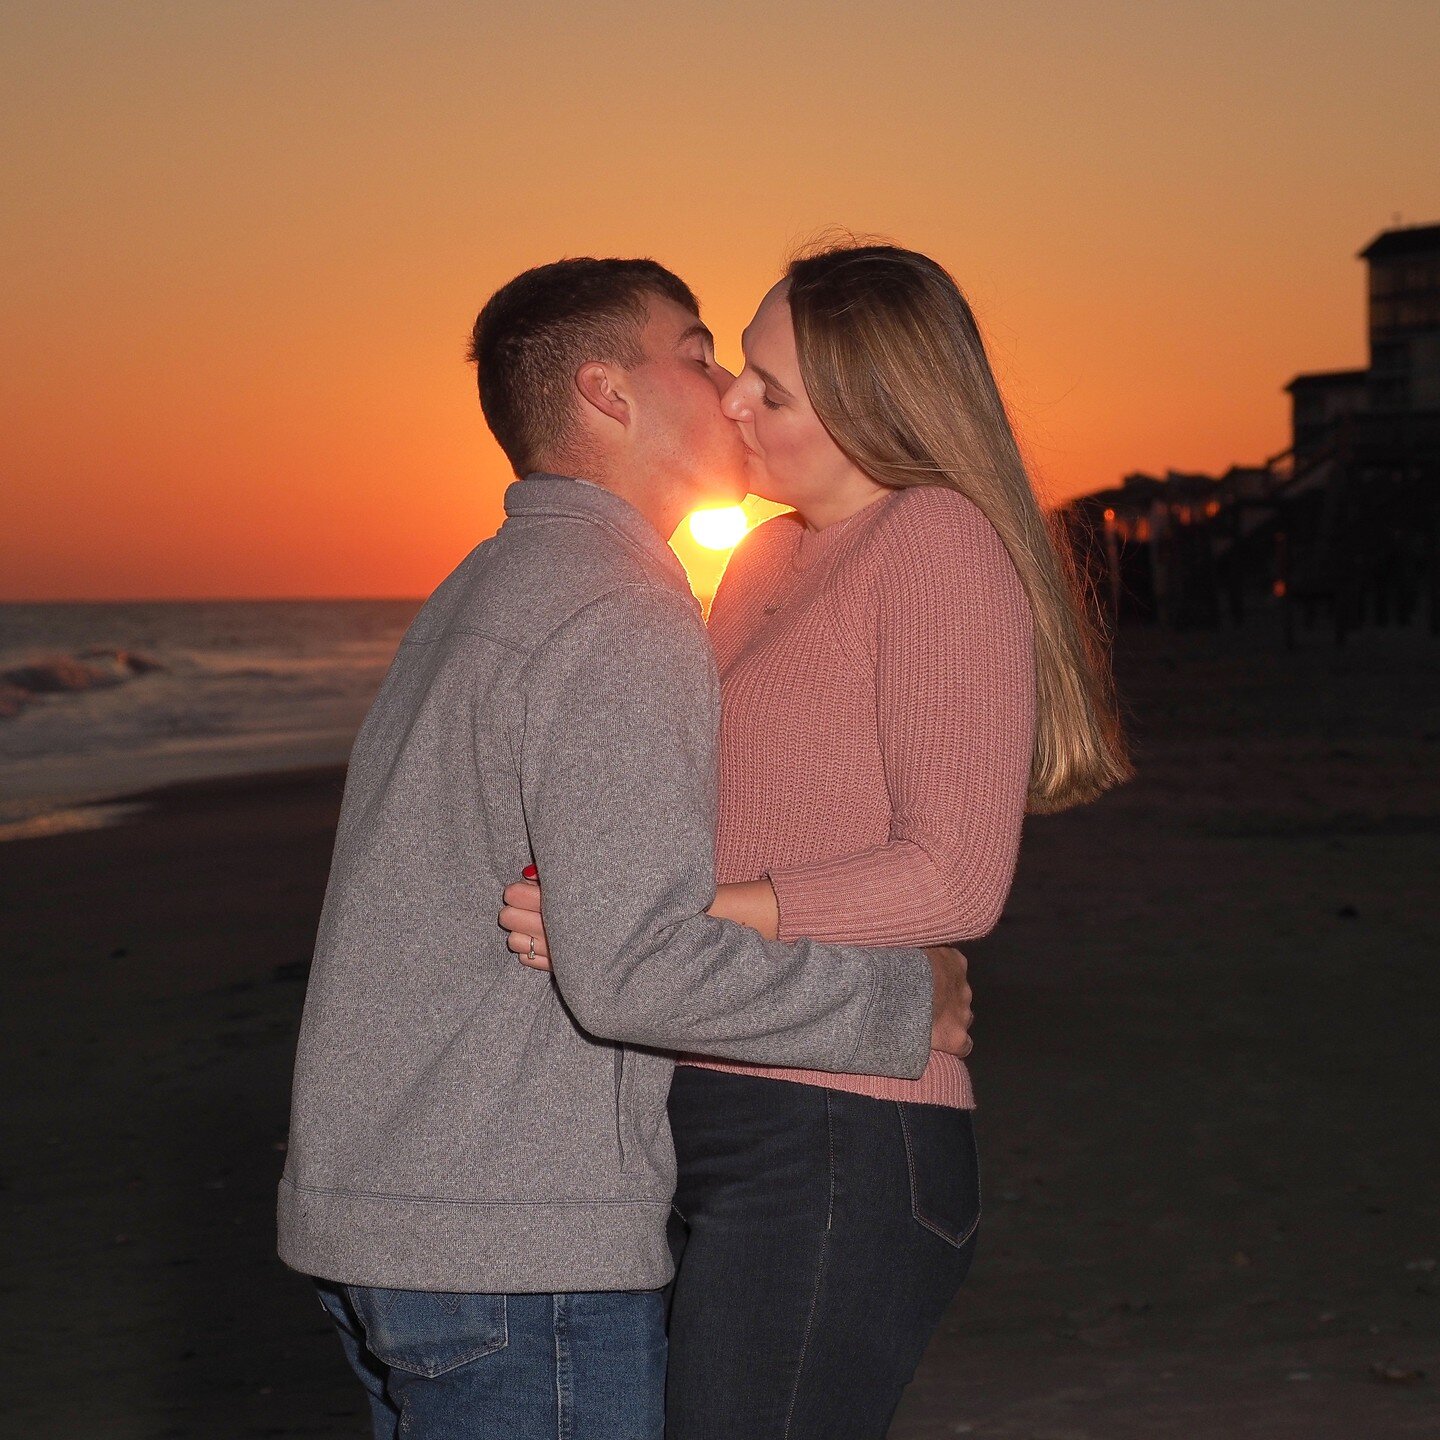 Sunset Kiss. Couple on Topsail sharing a kiss at sunset.

#topsailisland #topsailbeach #sunset #sunsetkiss #engaged💍 #billybeach #billybeachphoto #romanticcouples #sunsetkissed #ncbeaches #weddingphotography #beachportraits